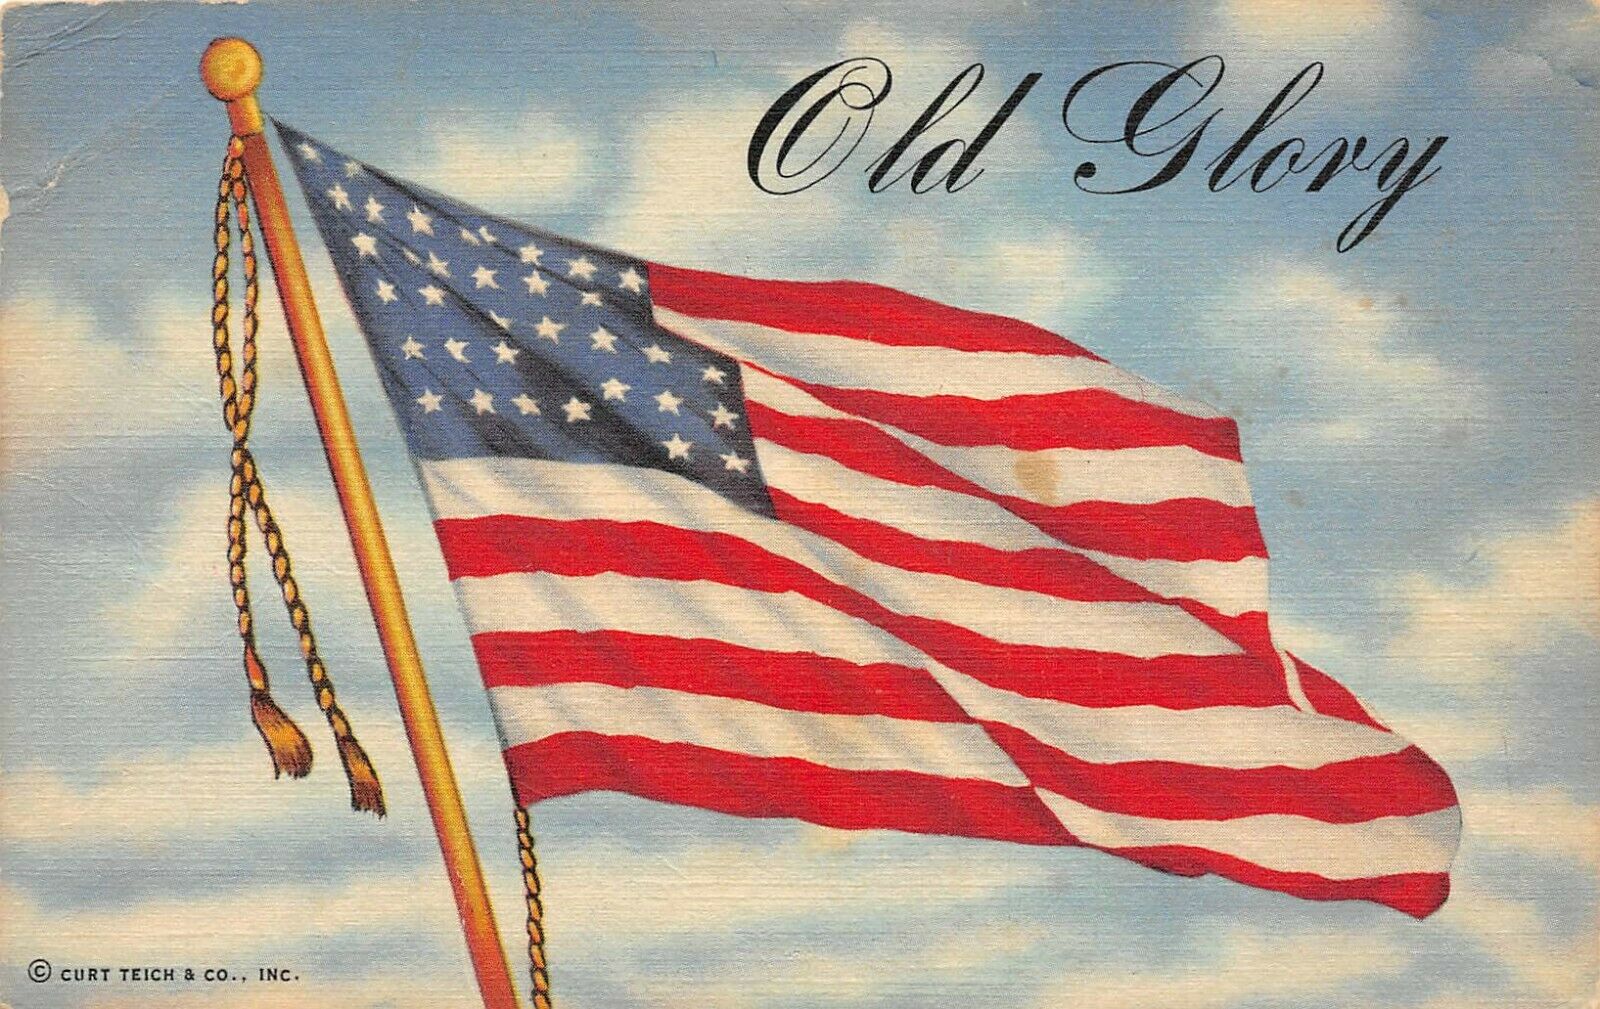 C6666 Old Glory, 48-star American Flag - 1941 Teich Linen Postcard No. 1b-h17